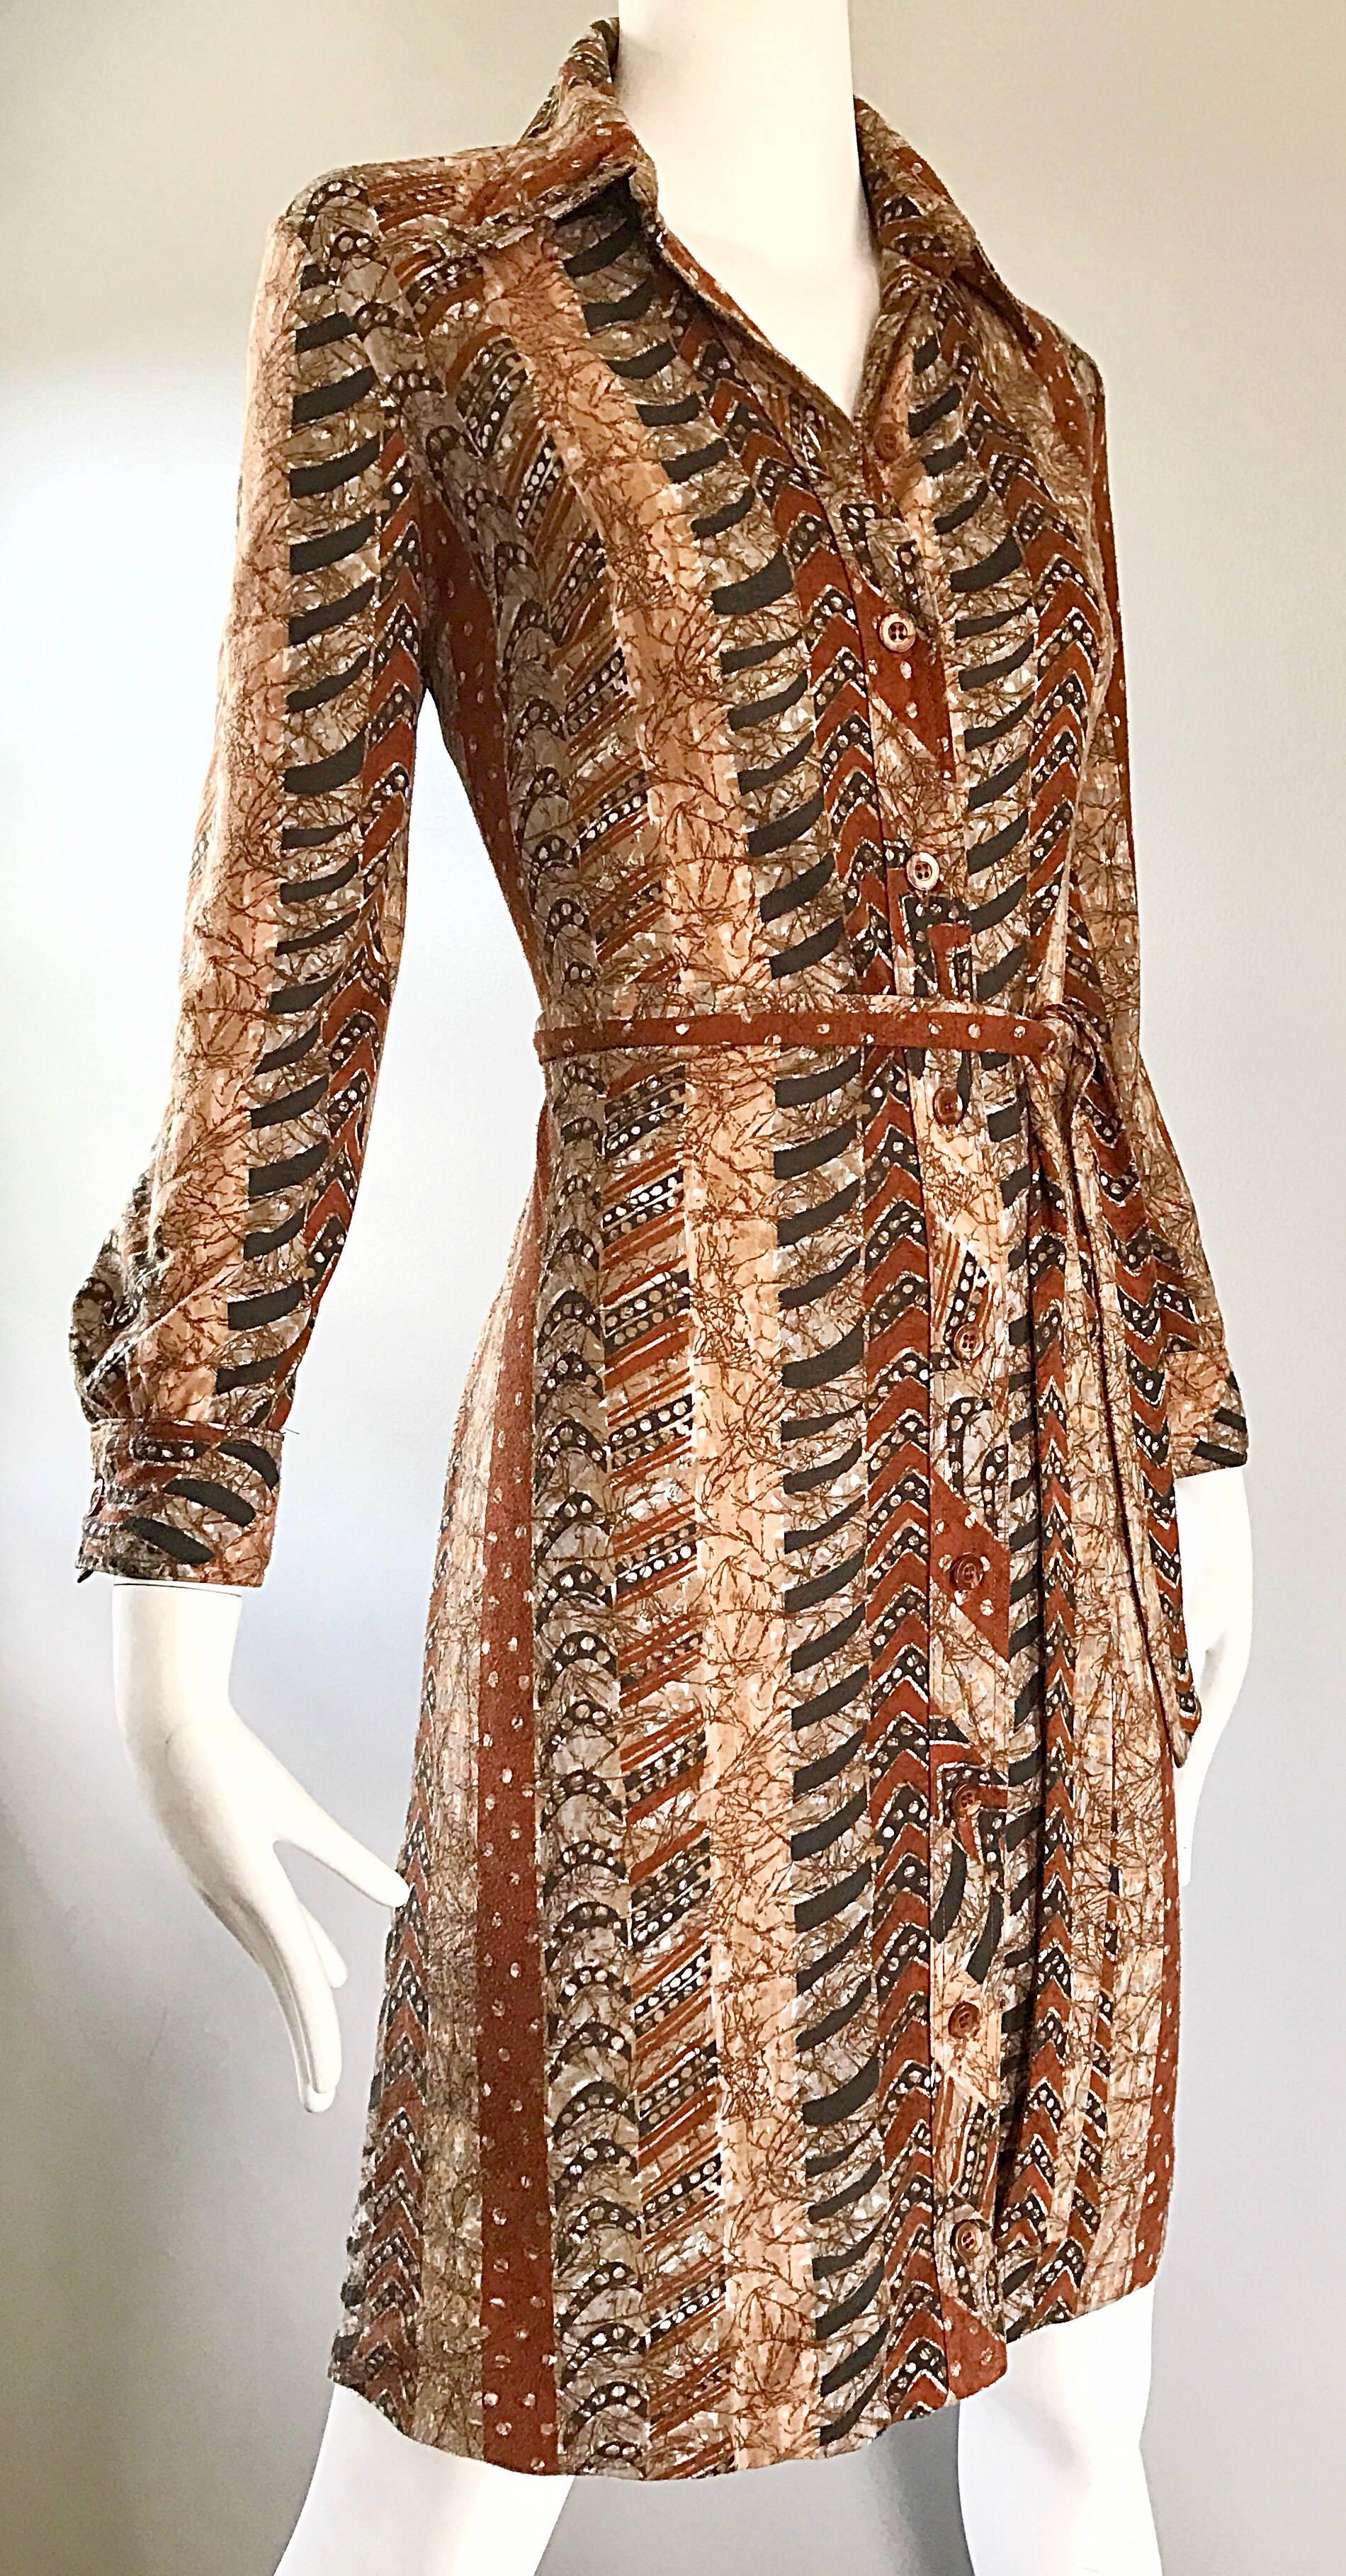 Bonwit Teller 1970s Batik Print Belted Cotton 70s Vintage Brown Safari Dress  For Sale 2